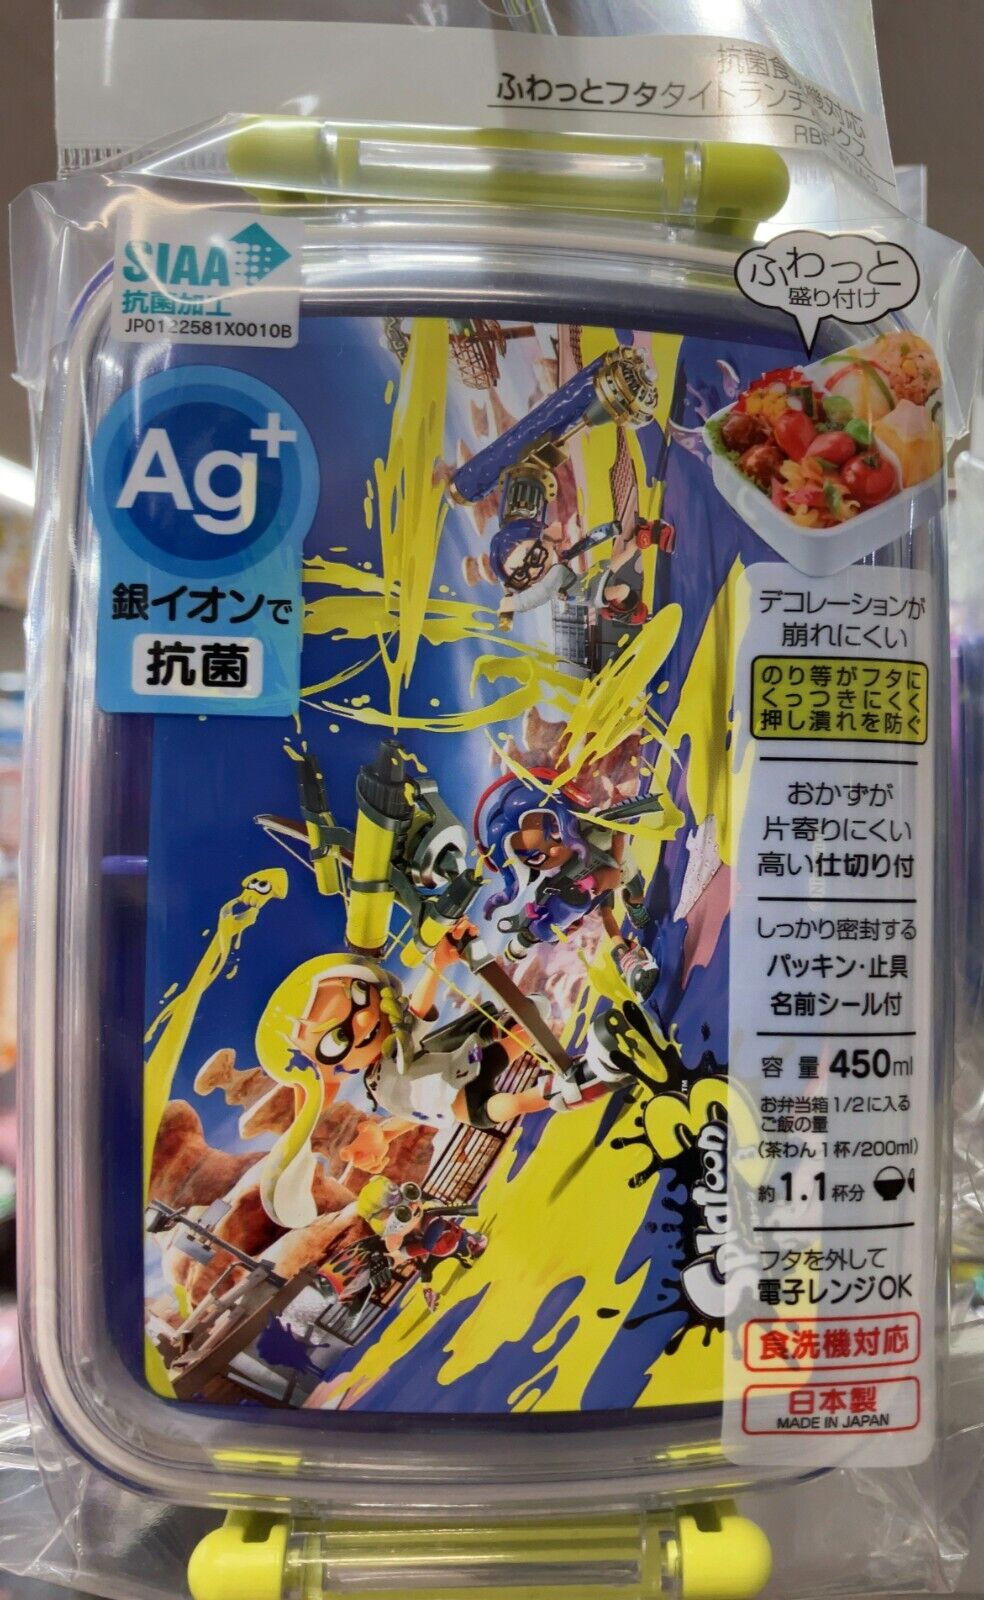 Splatoon 3 Lunch Box 450ml Food Container Box RBF3ANAG New Game Nintendo Japan